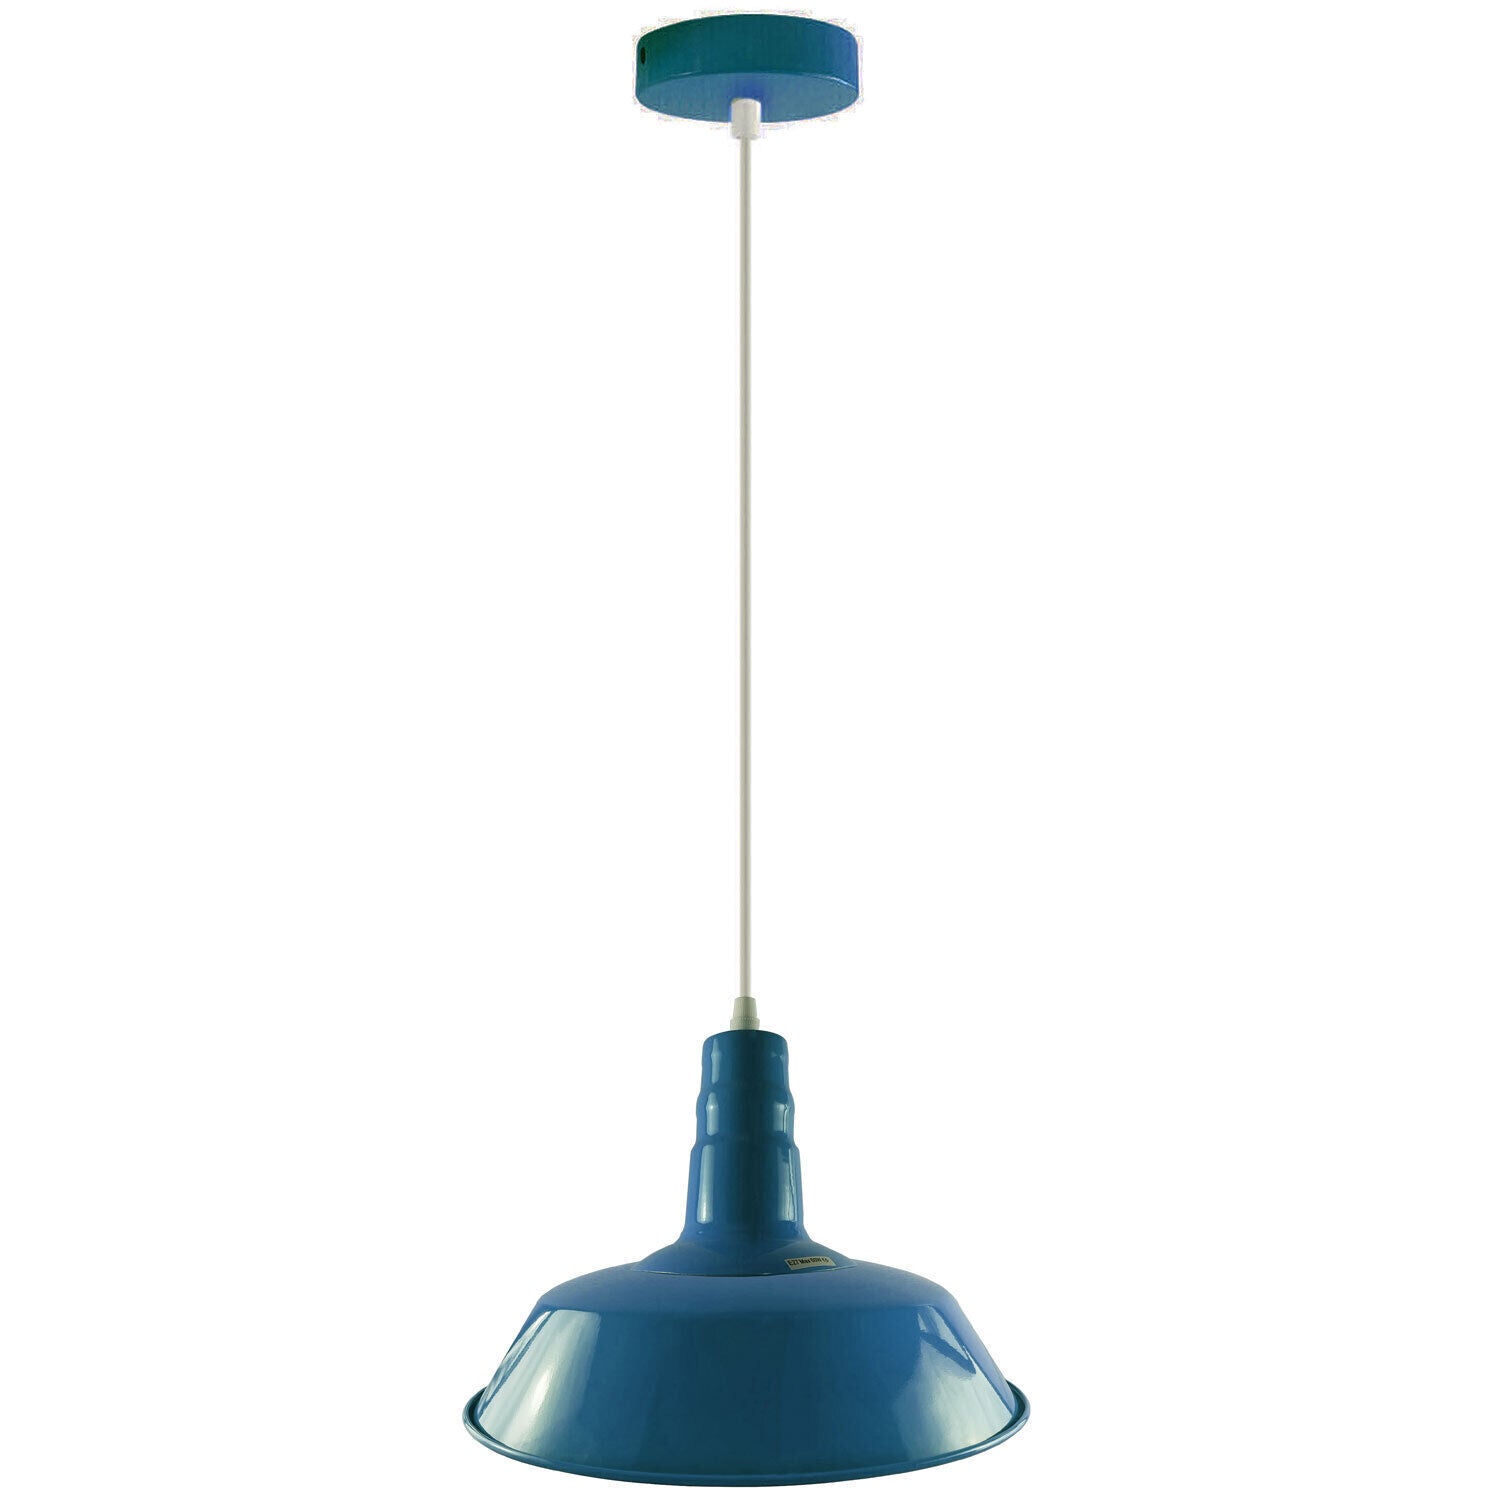 Hanging pendant Ceiling Lamp, Metal Light Shade Lighting UK E27 Edison base Decorate Height Adjustable Pendant 